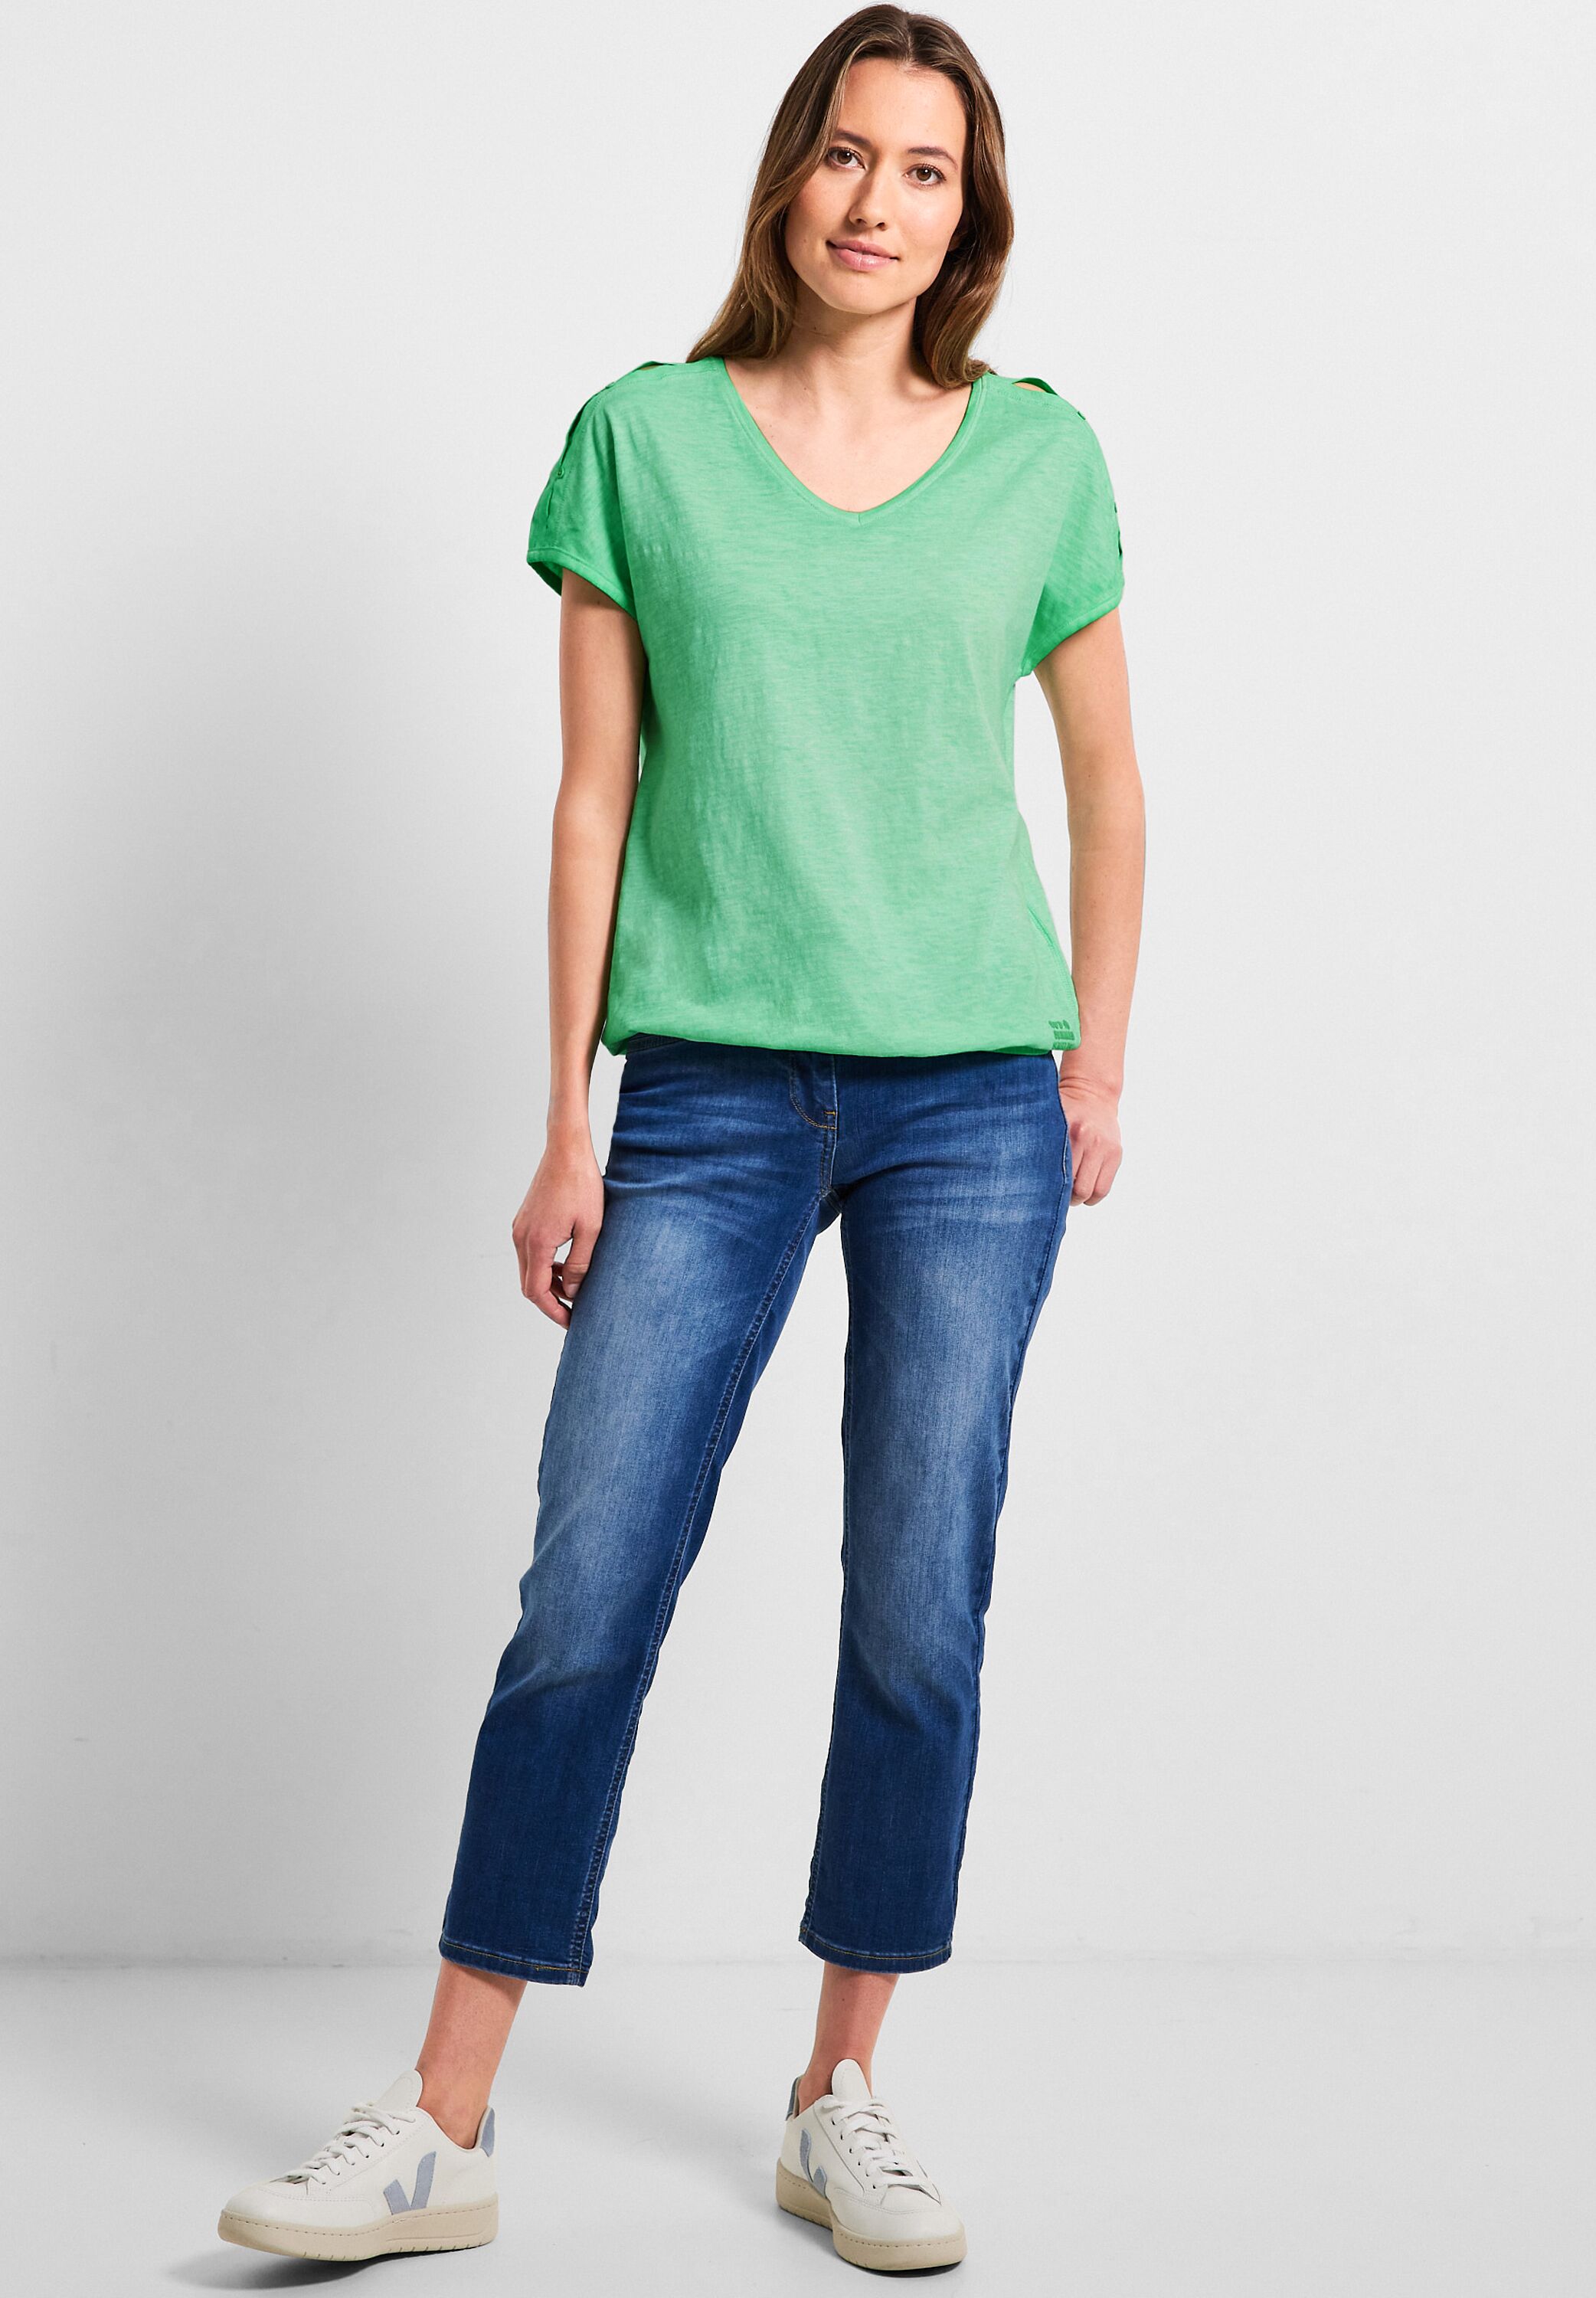 CECIL T-Shirt in Fresh Green SALE B320028-14794 - Mode reduziert CONCEPT im